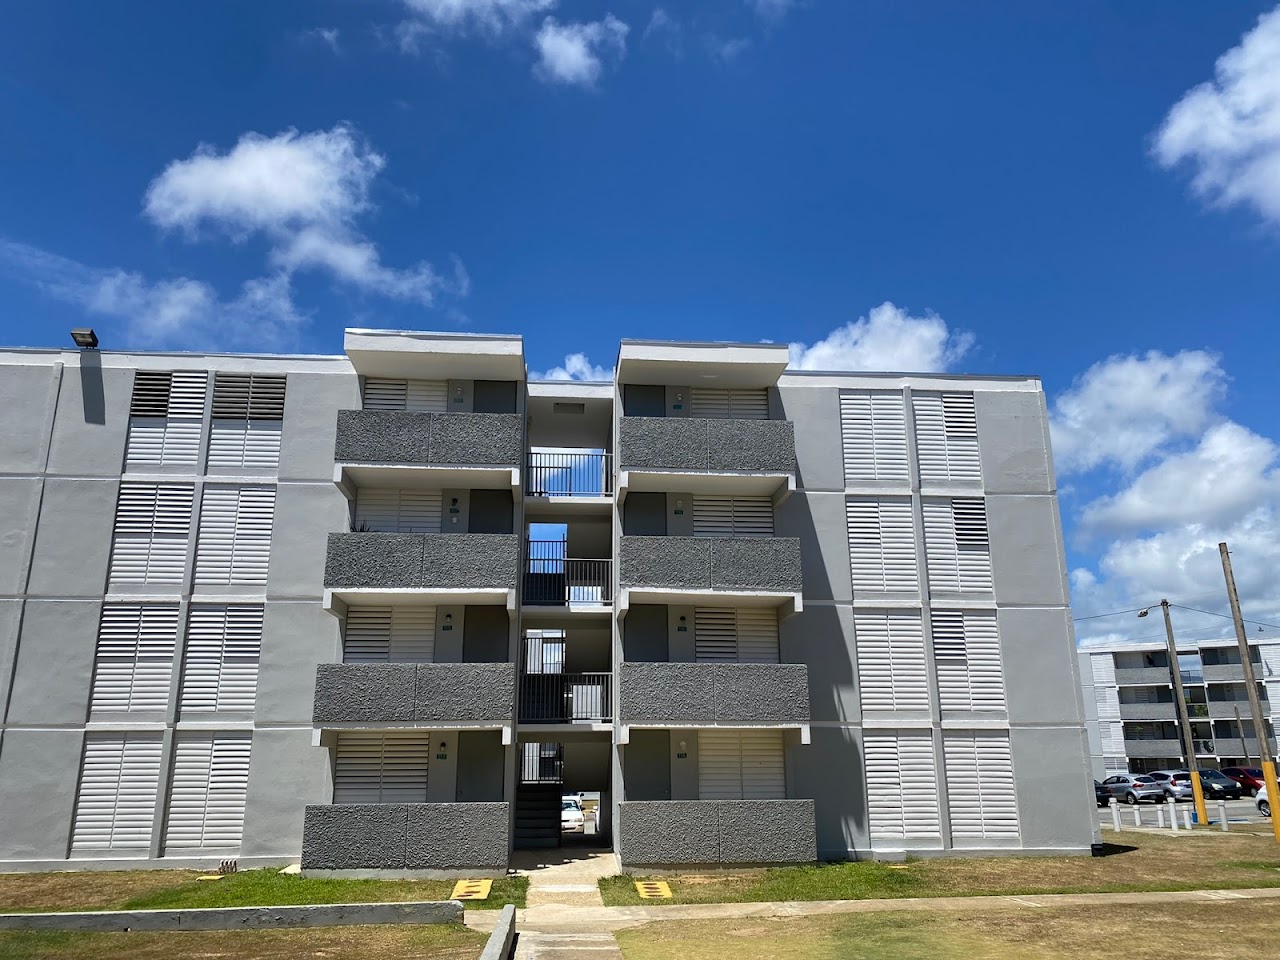 Photo of VISTAS DEL MAR APTS. Affordable housing located at OSVALDO MOLINA ST FAJARDO, PR 